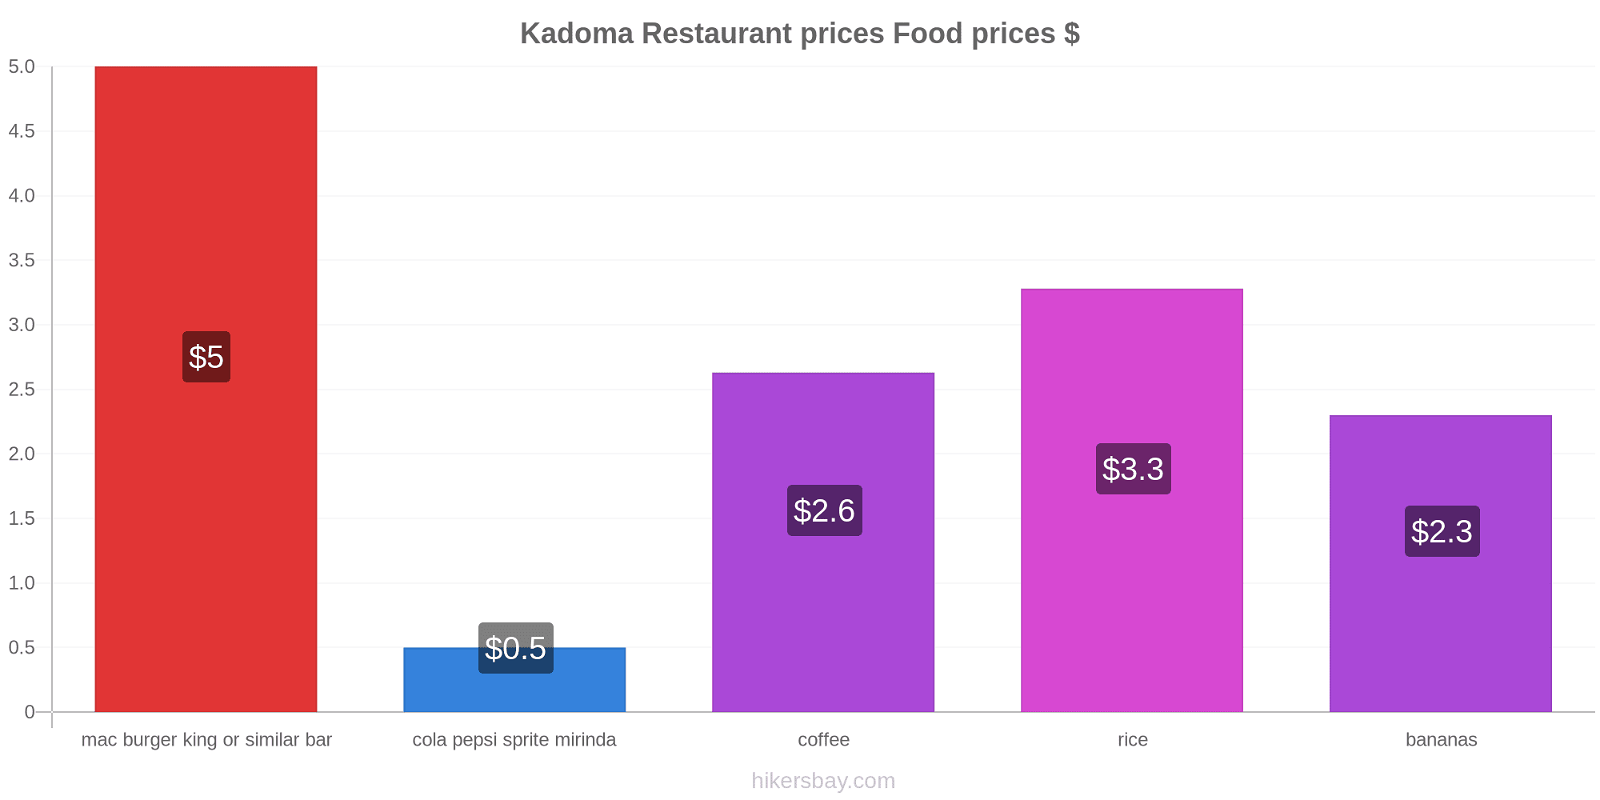 Kadoma price changes hikersbay.com